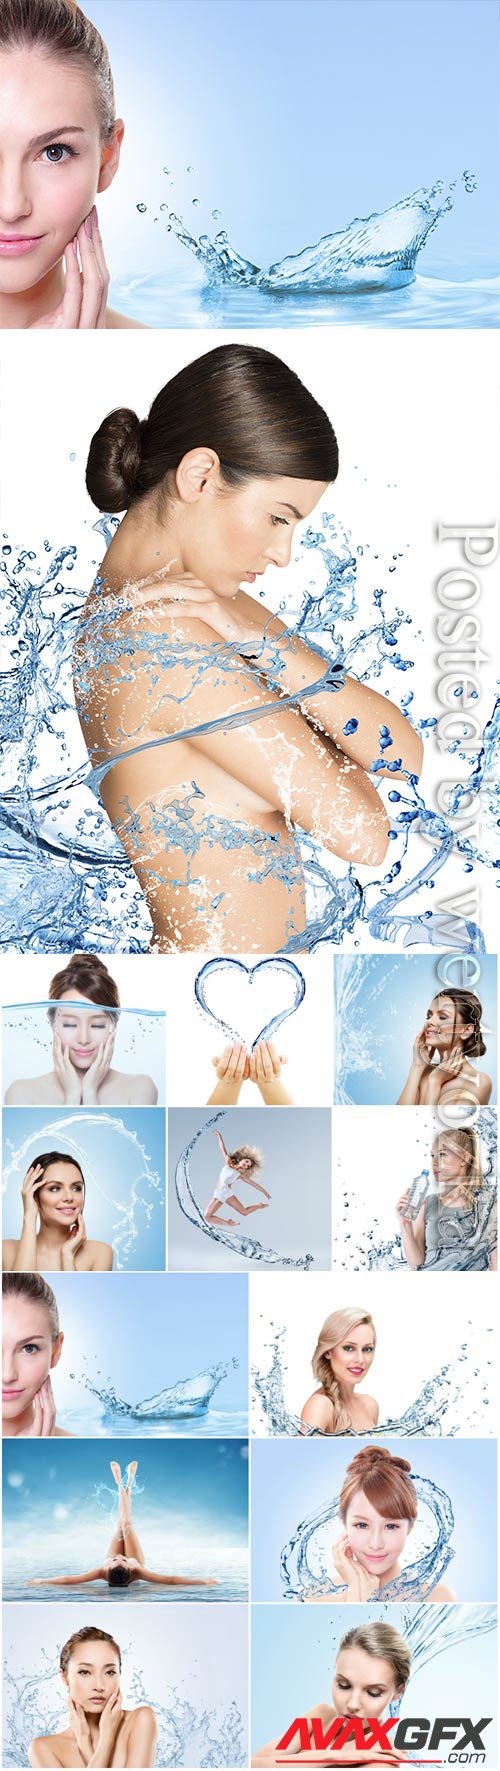 Girls splashing water stock photo